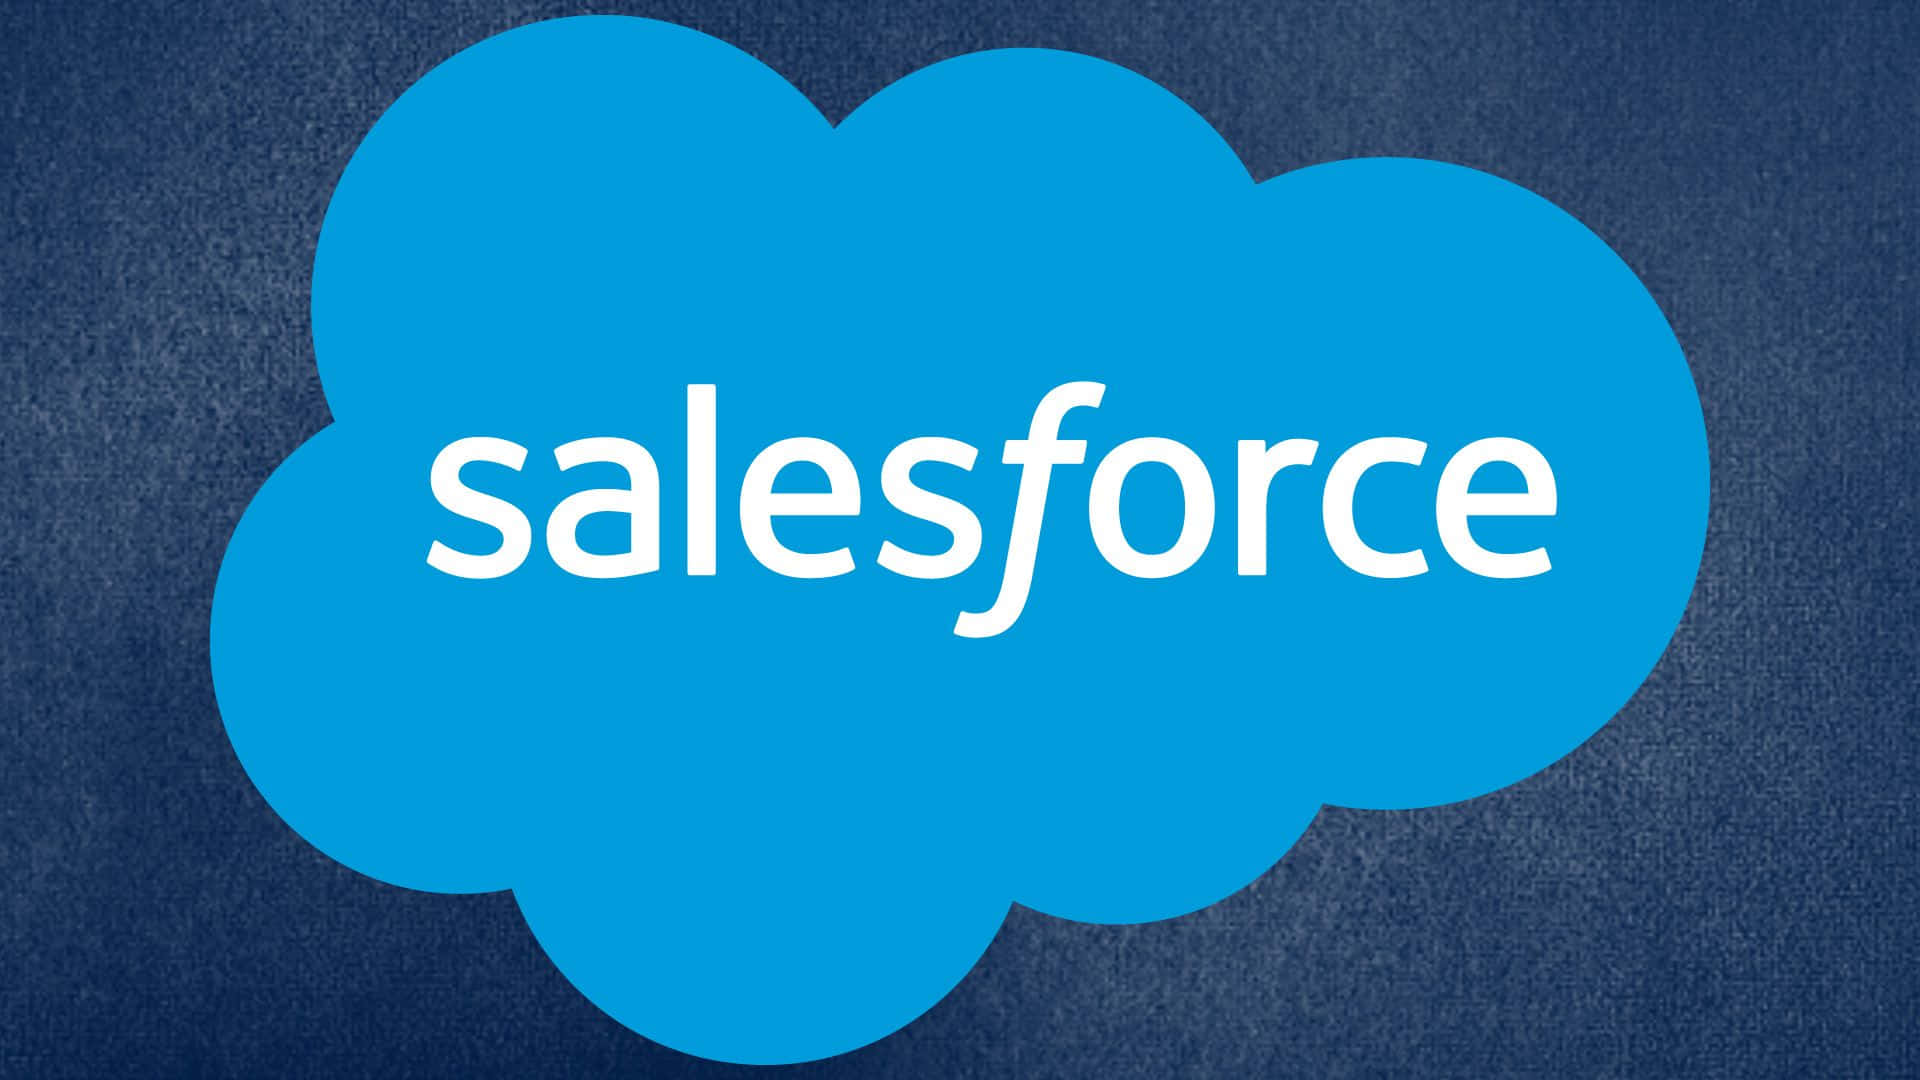 Salesforce Logo On A Blue Background Wallpaper